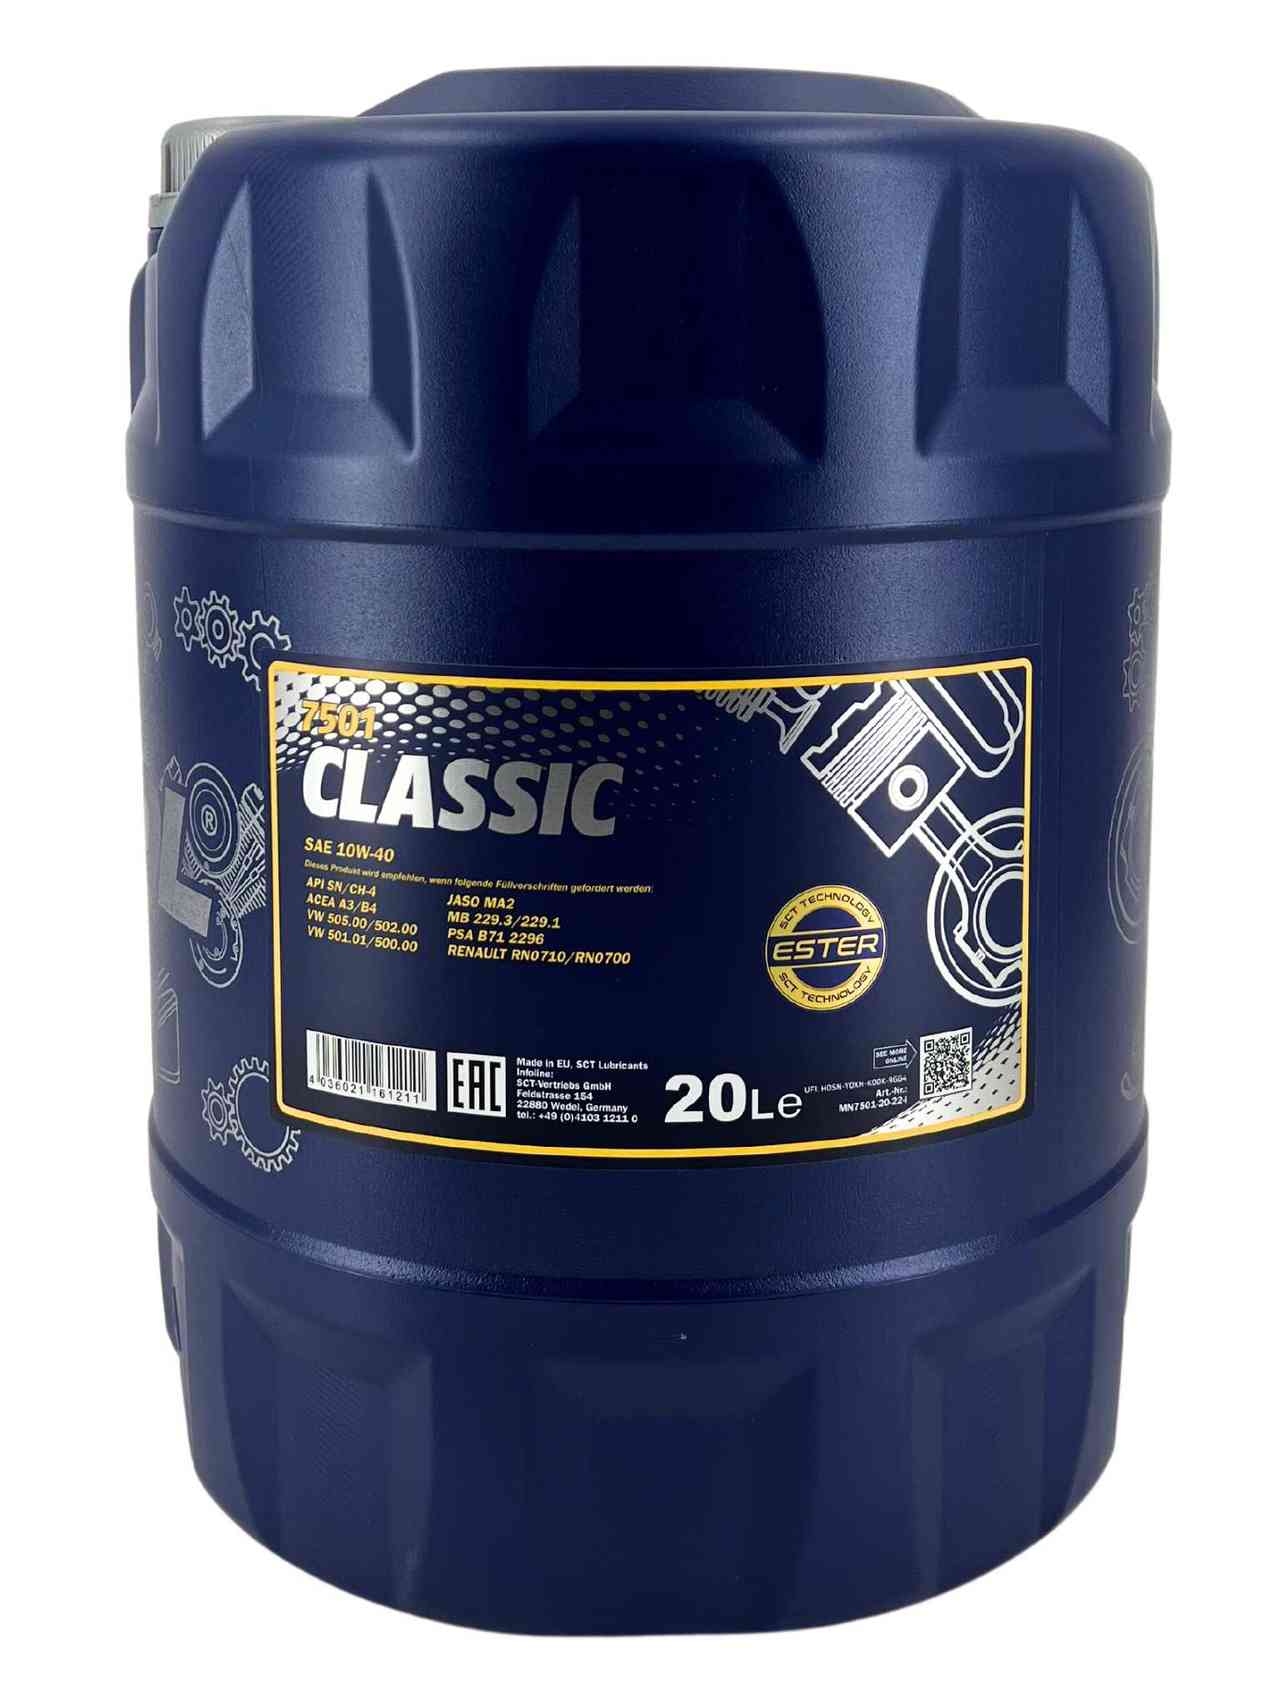 Mannol Classic 10W-40 20 Liter